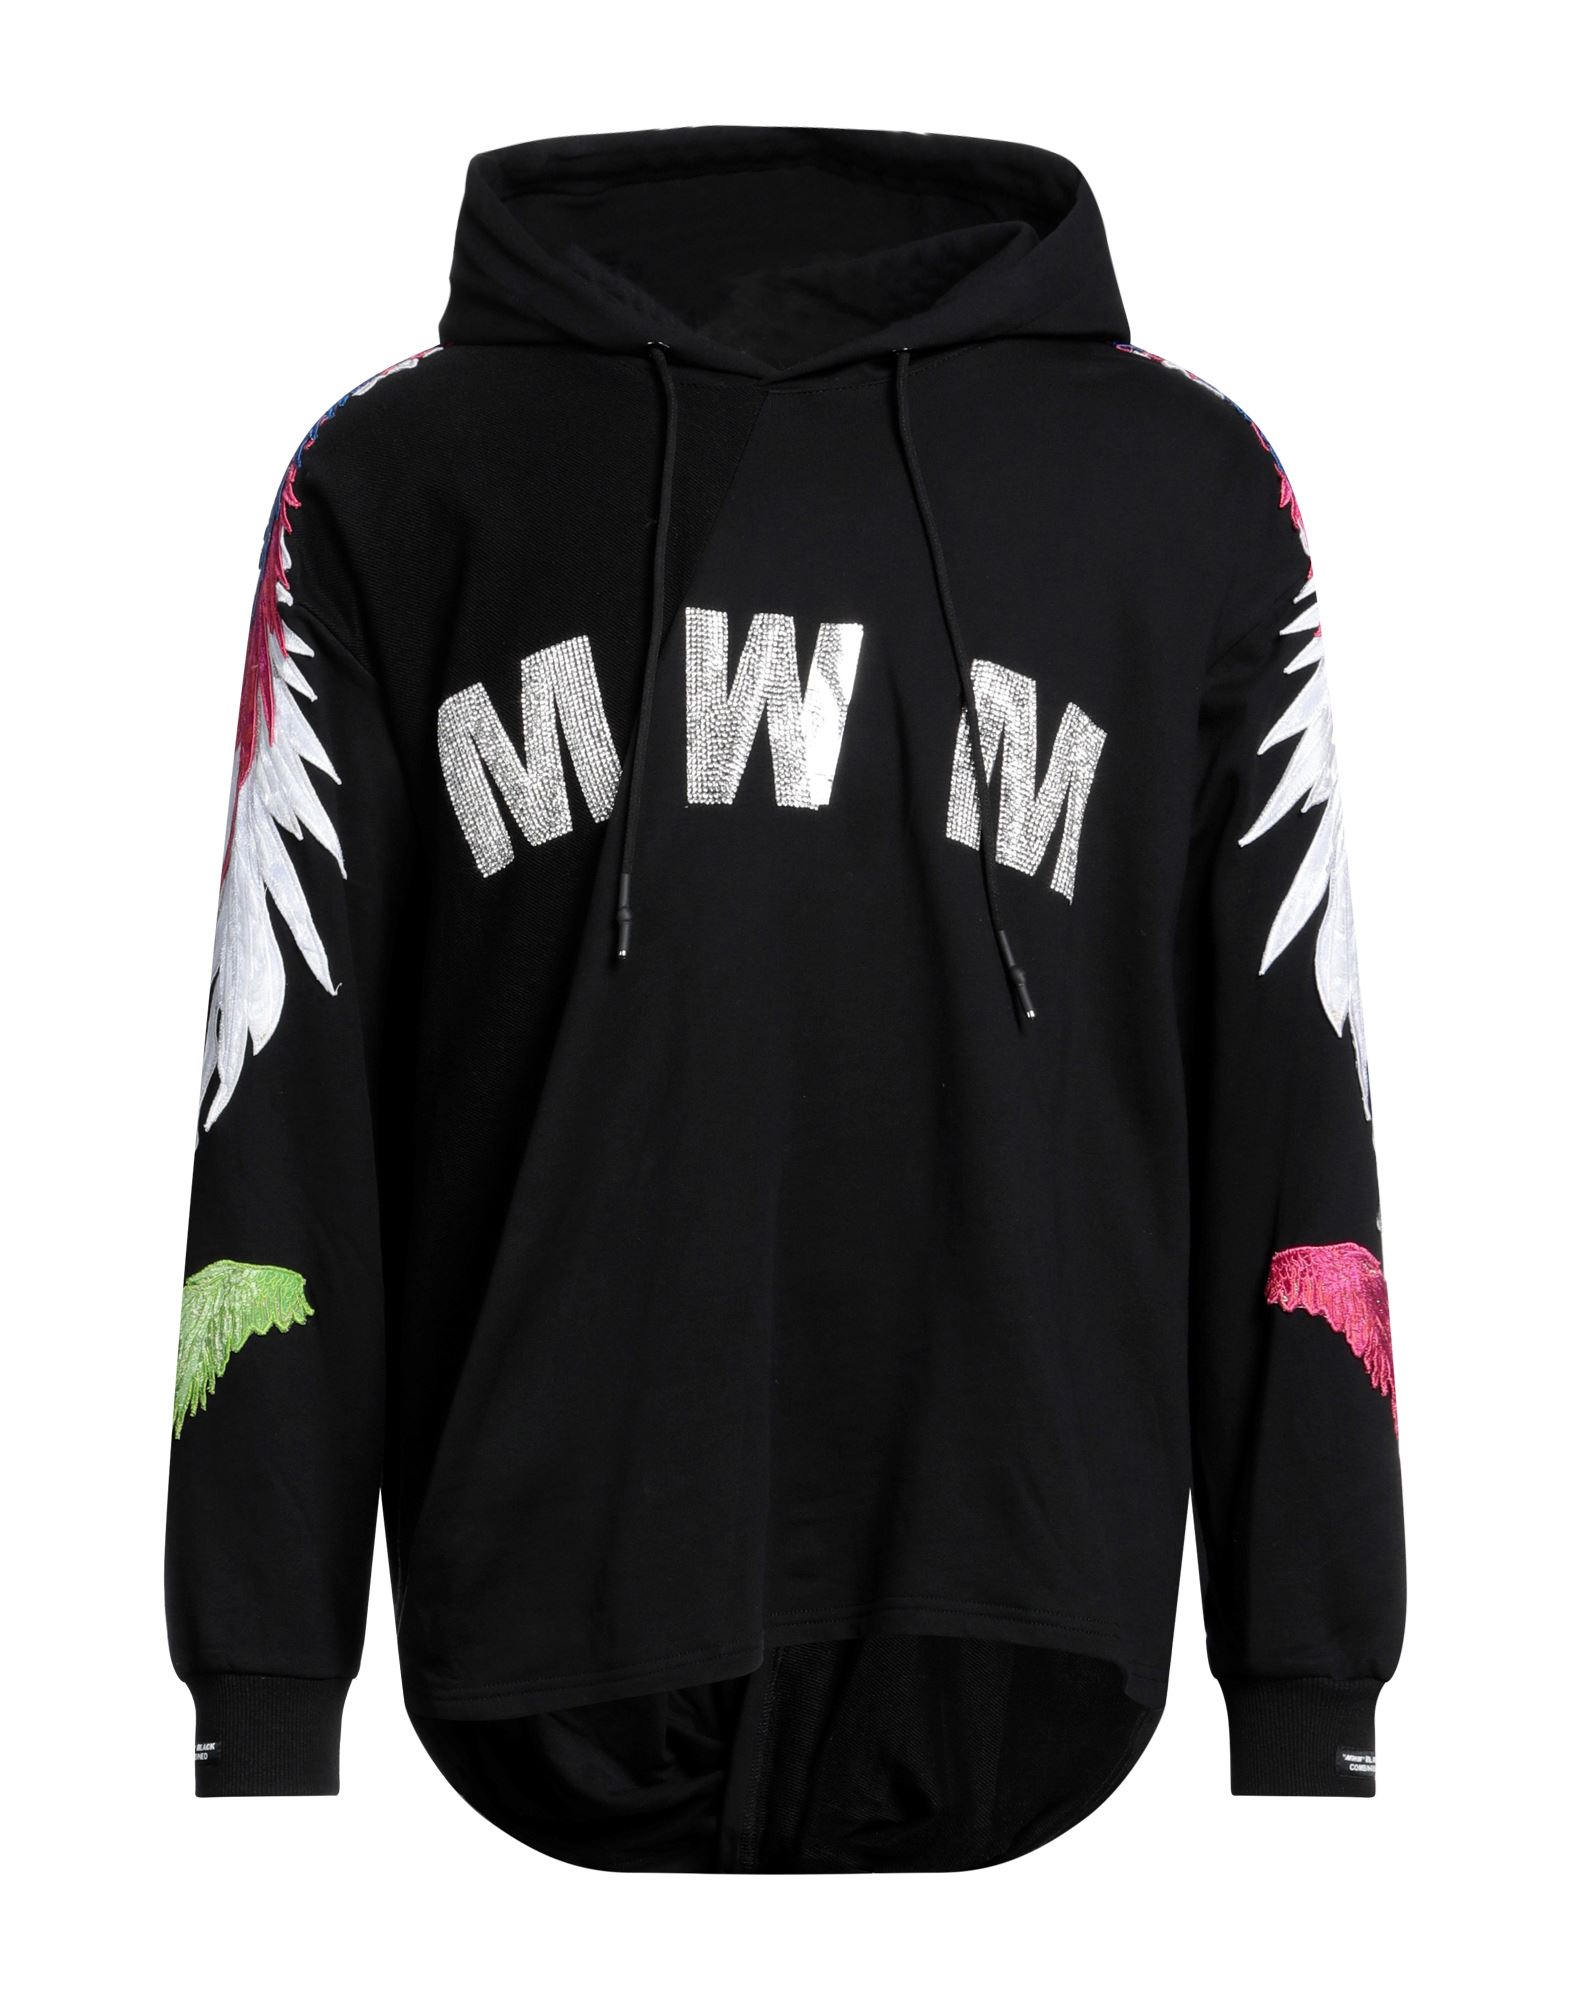 Mwm - Mod Wave Movement Mwm Mod Wave Movement Sweatshirts In Black ...